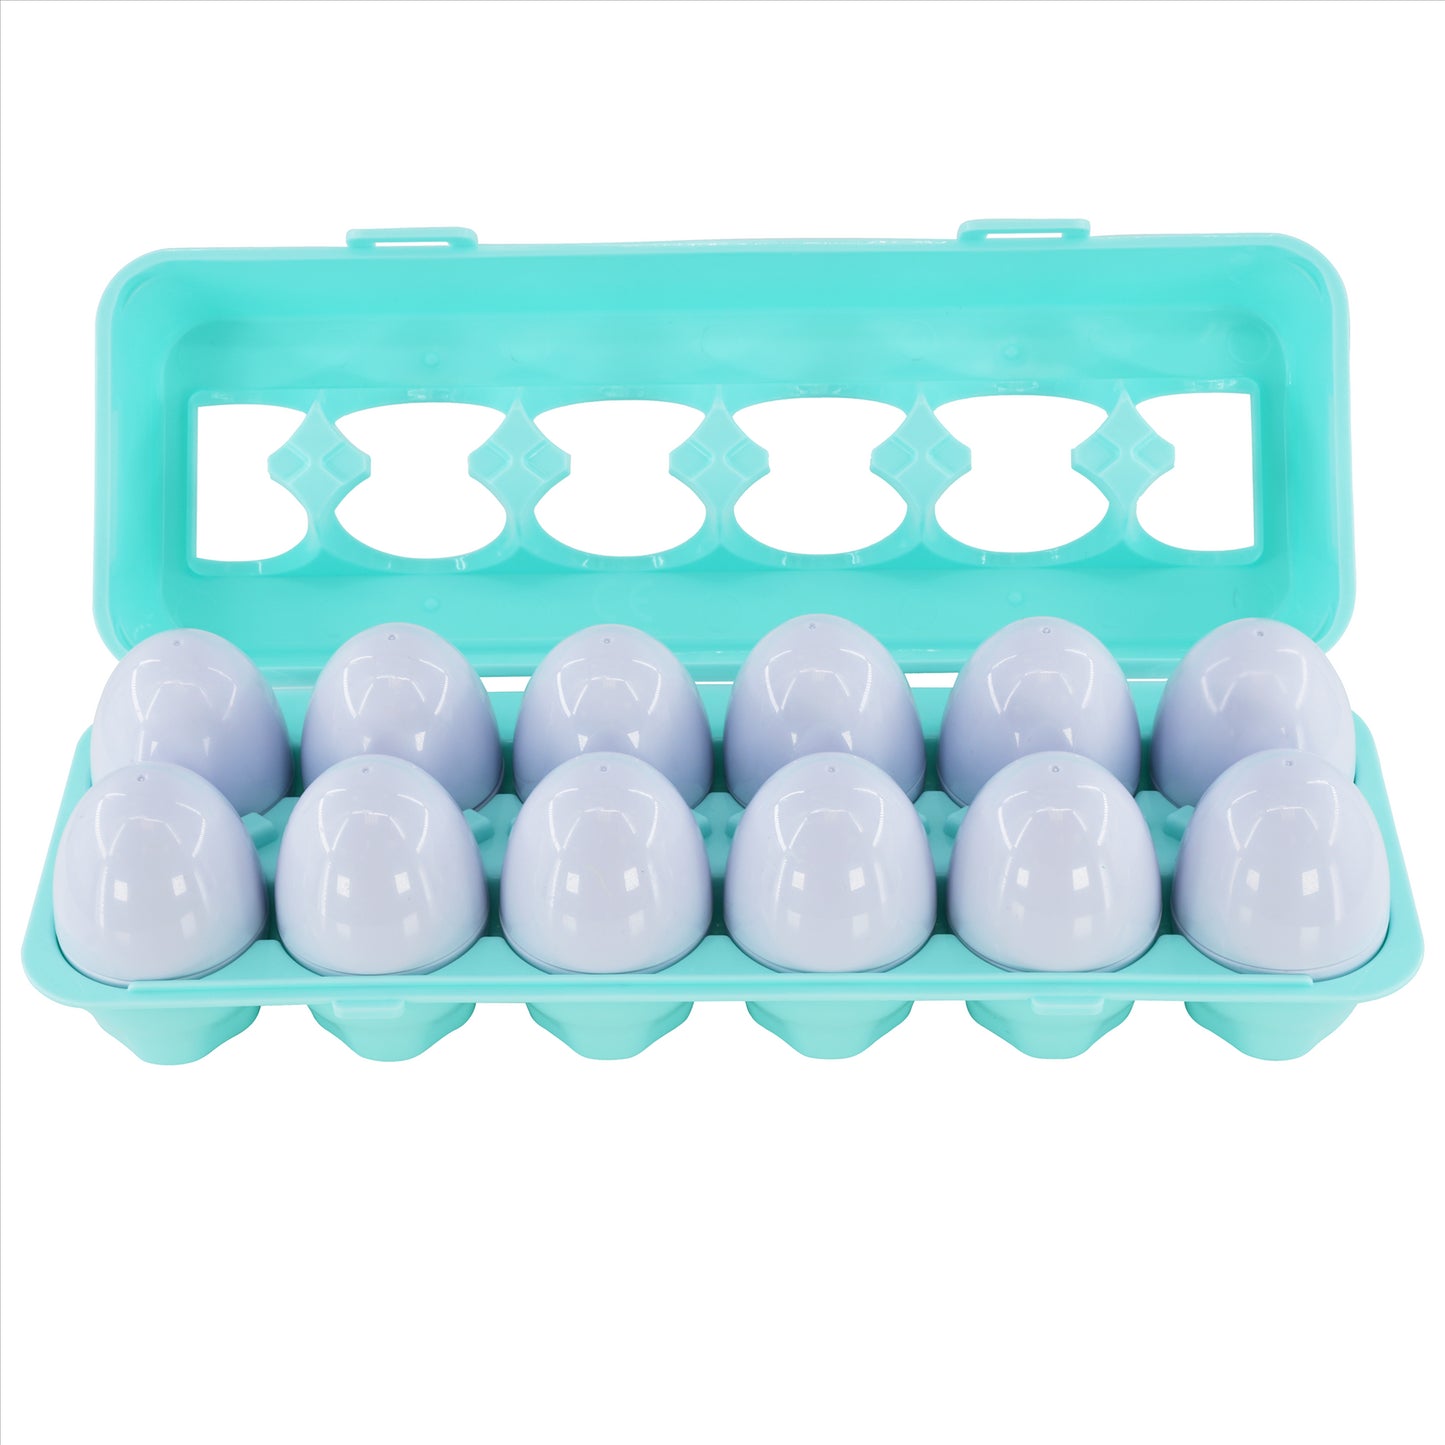 12 Shape Sorter Eggs by The Magic Toy Shop - UKBuyZone